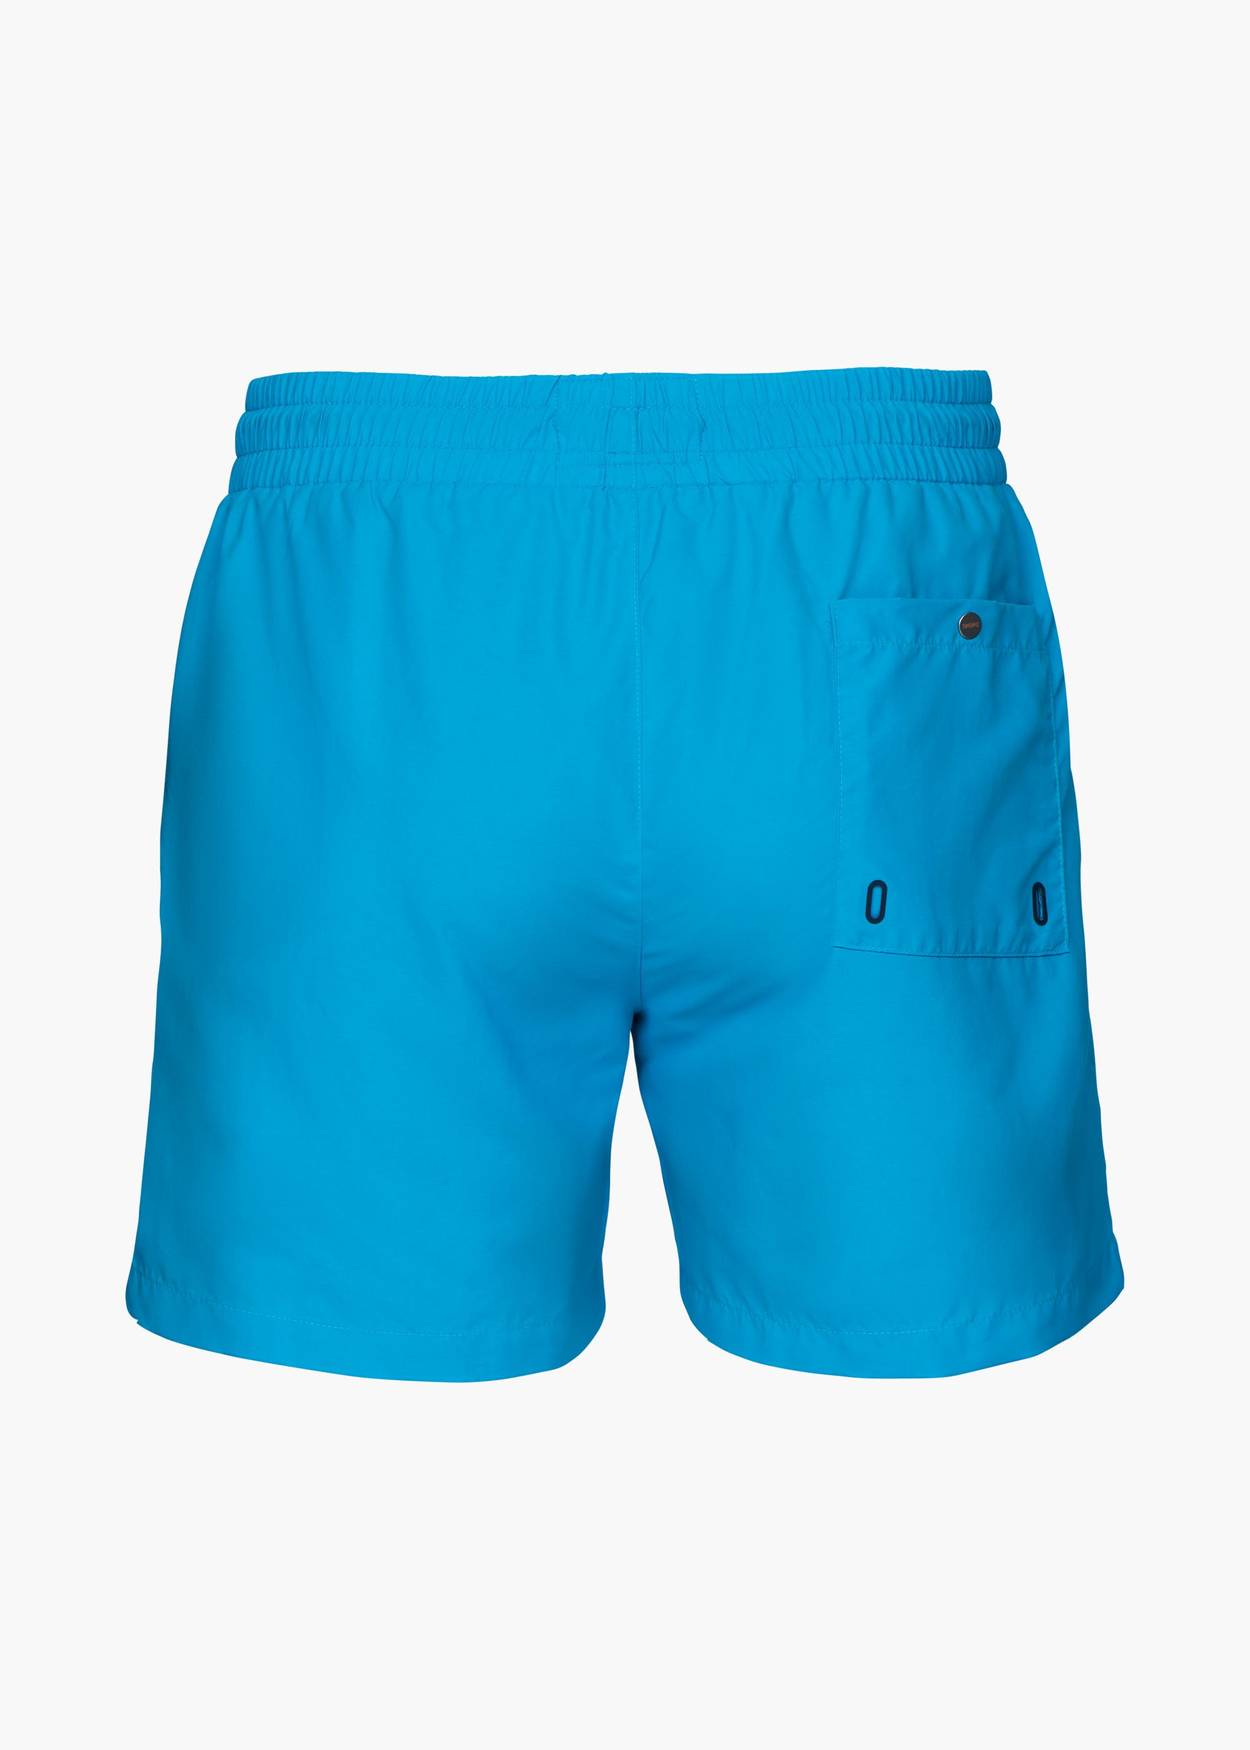 The Swim Shorts